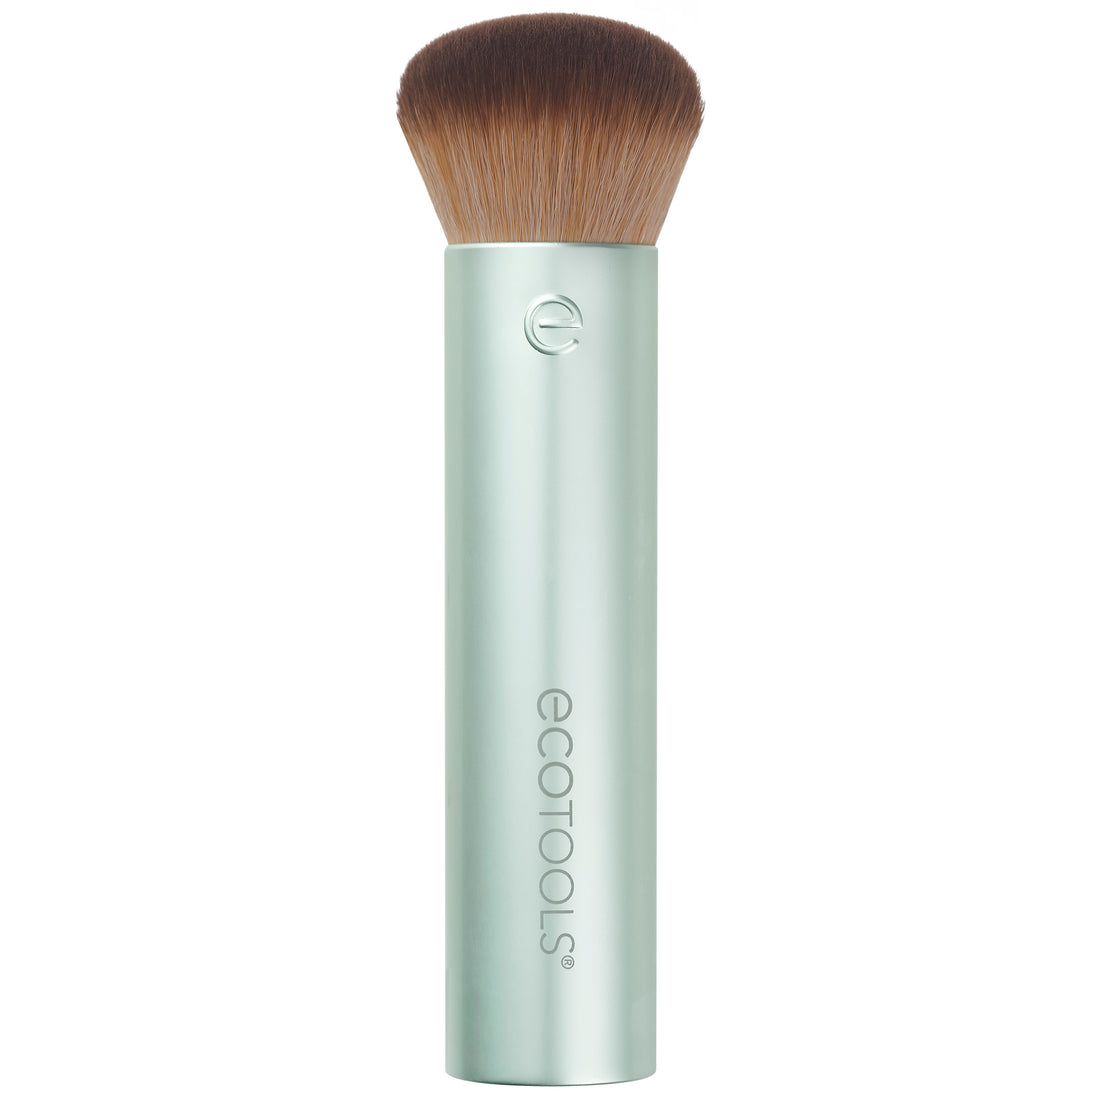 EcoTools Flawless Finish Powder Makeup Brush, For Powdered Blush or Setting  Powder Makeup, Natural Finish, Recycled Aluminum Handle, 1 Count – EcoTools  Beauty